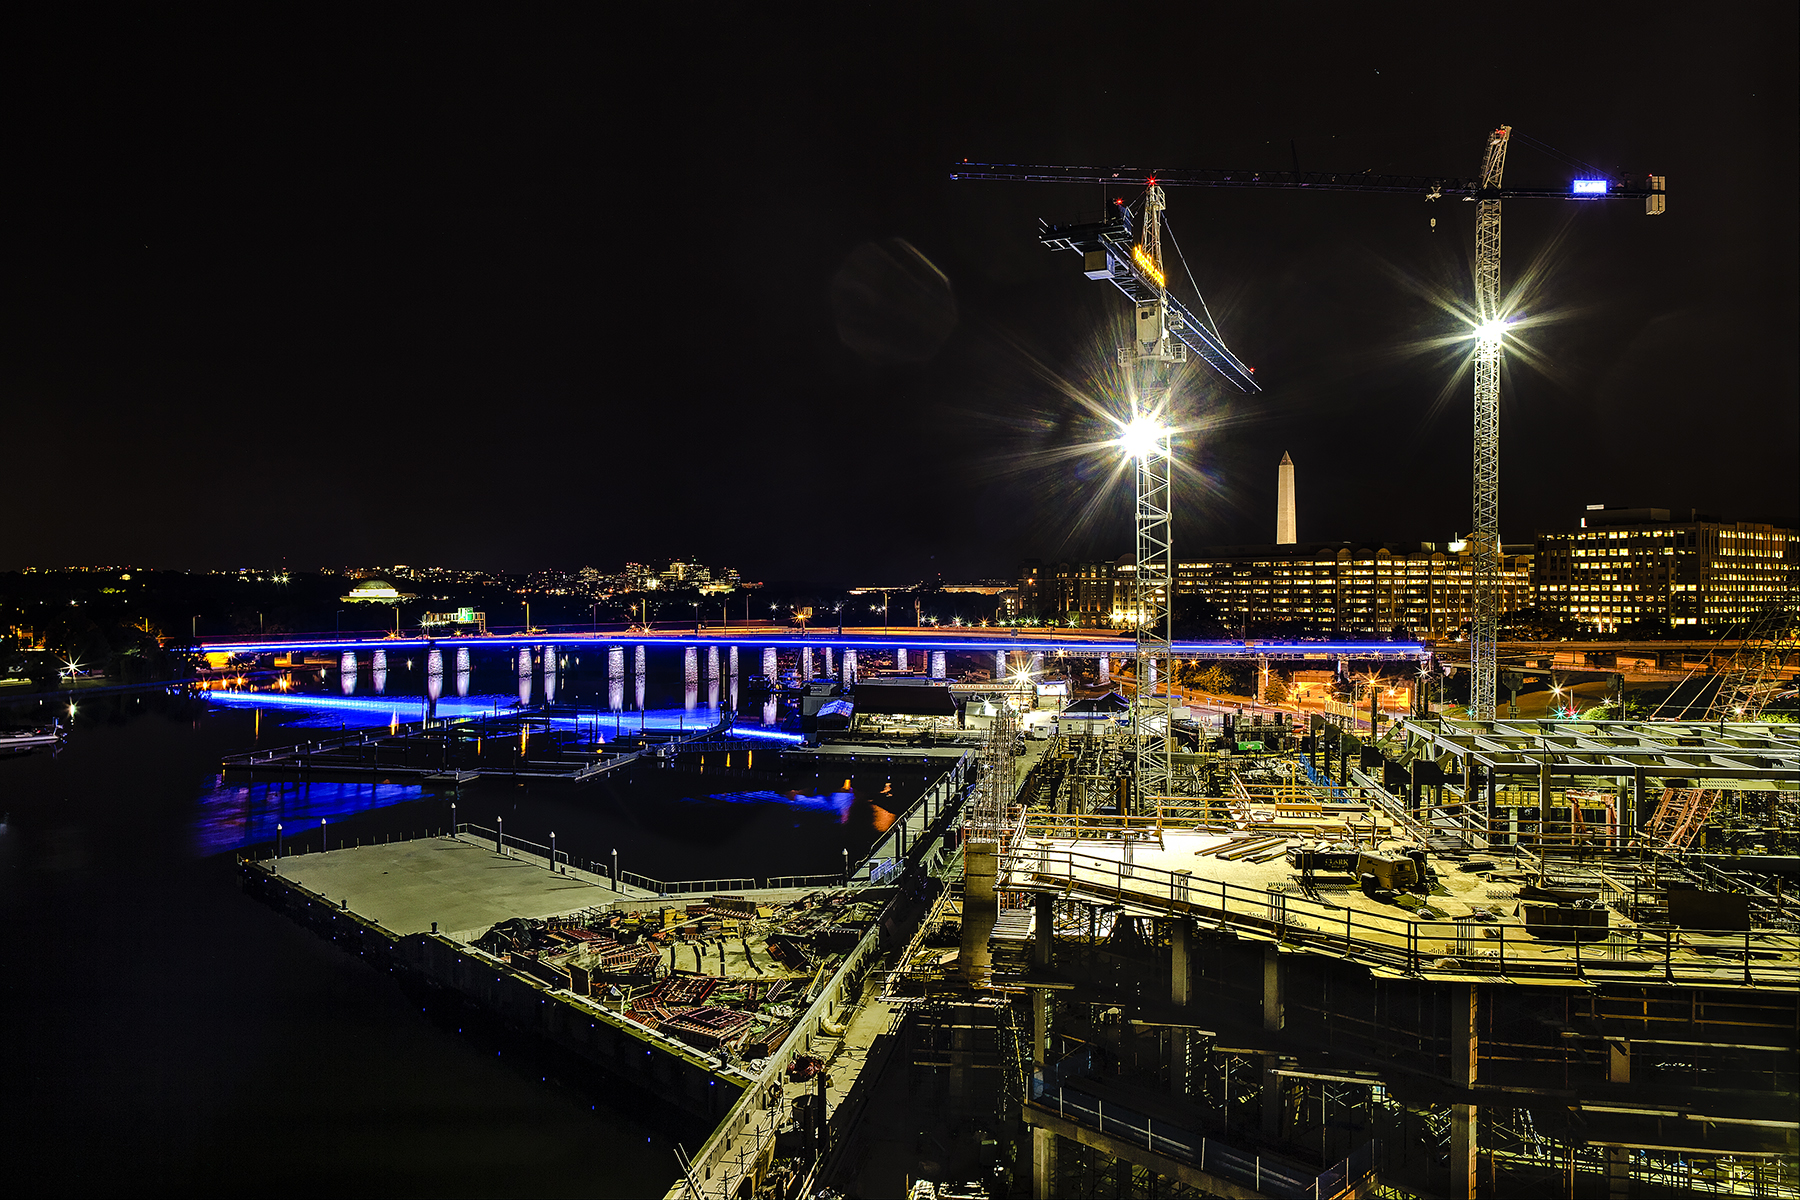 The Case bridge is seen lit up. (Courtesy Hoffman-Madison/Matthew Borkoski)